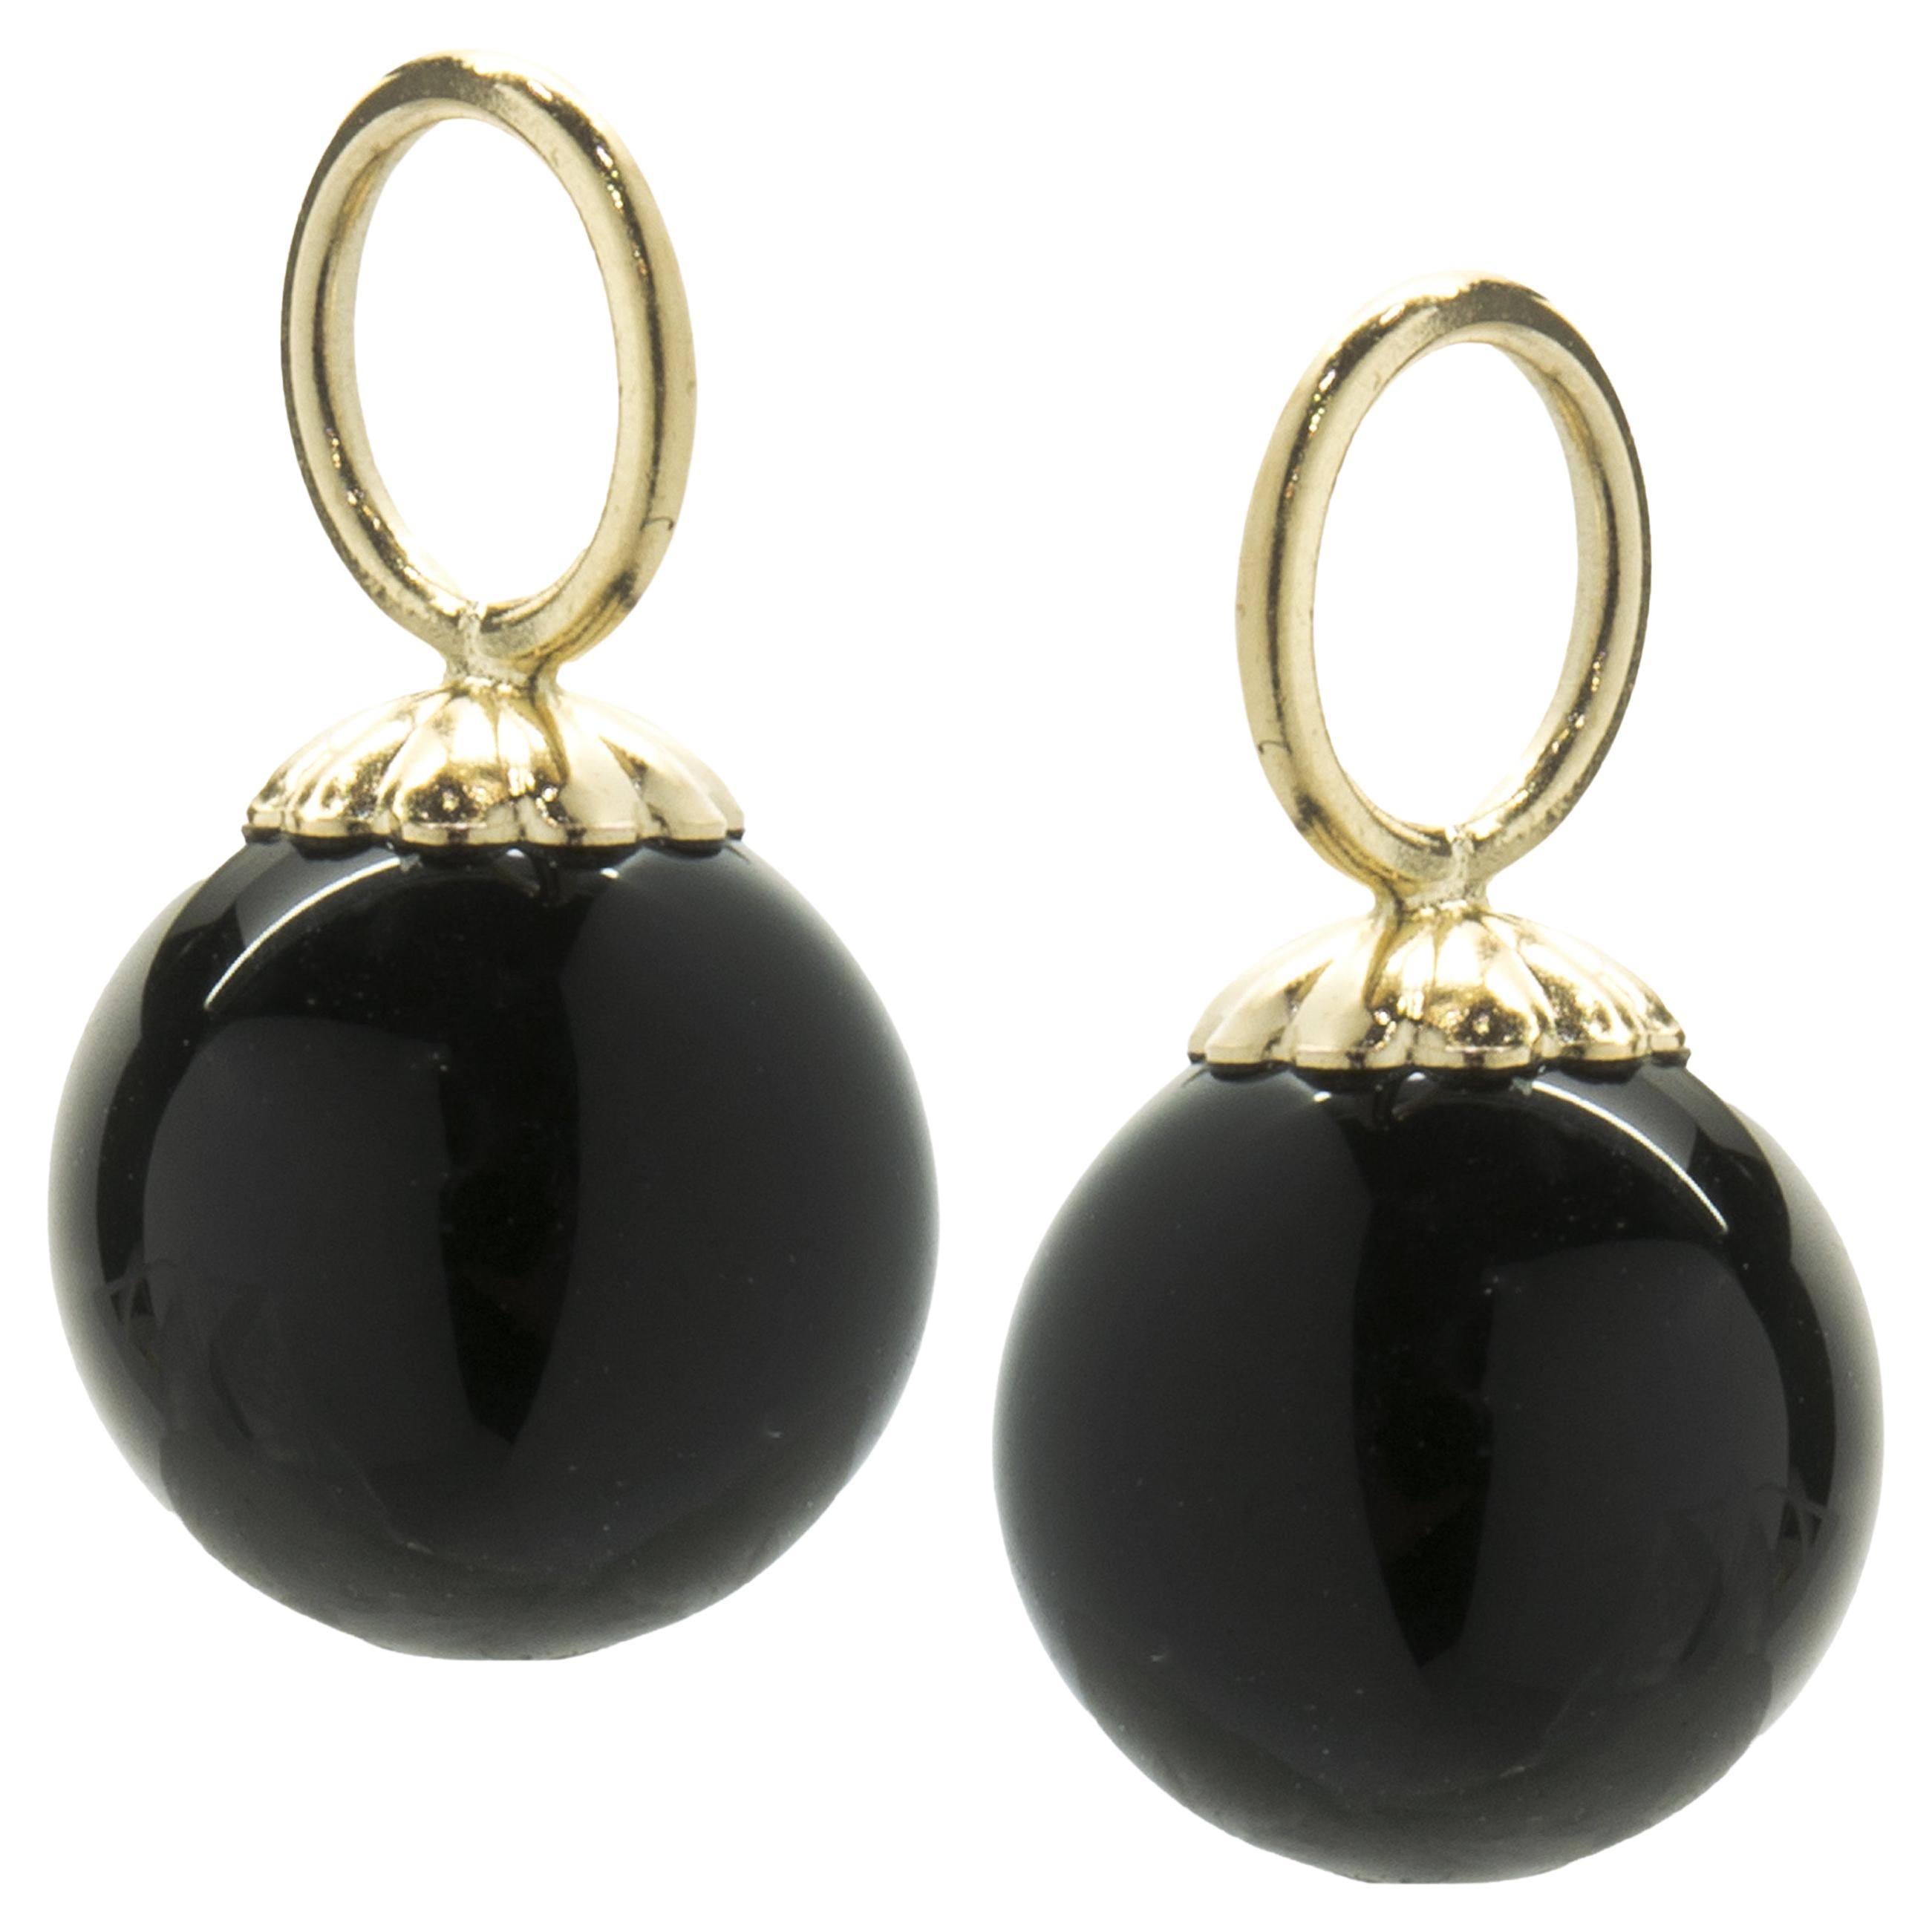 14 Karat Yellow Gold Black Onyx Ball Earring Enhancers